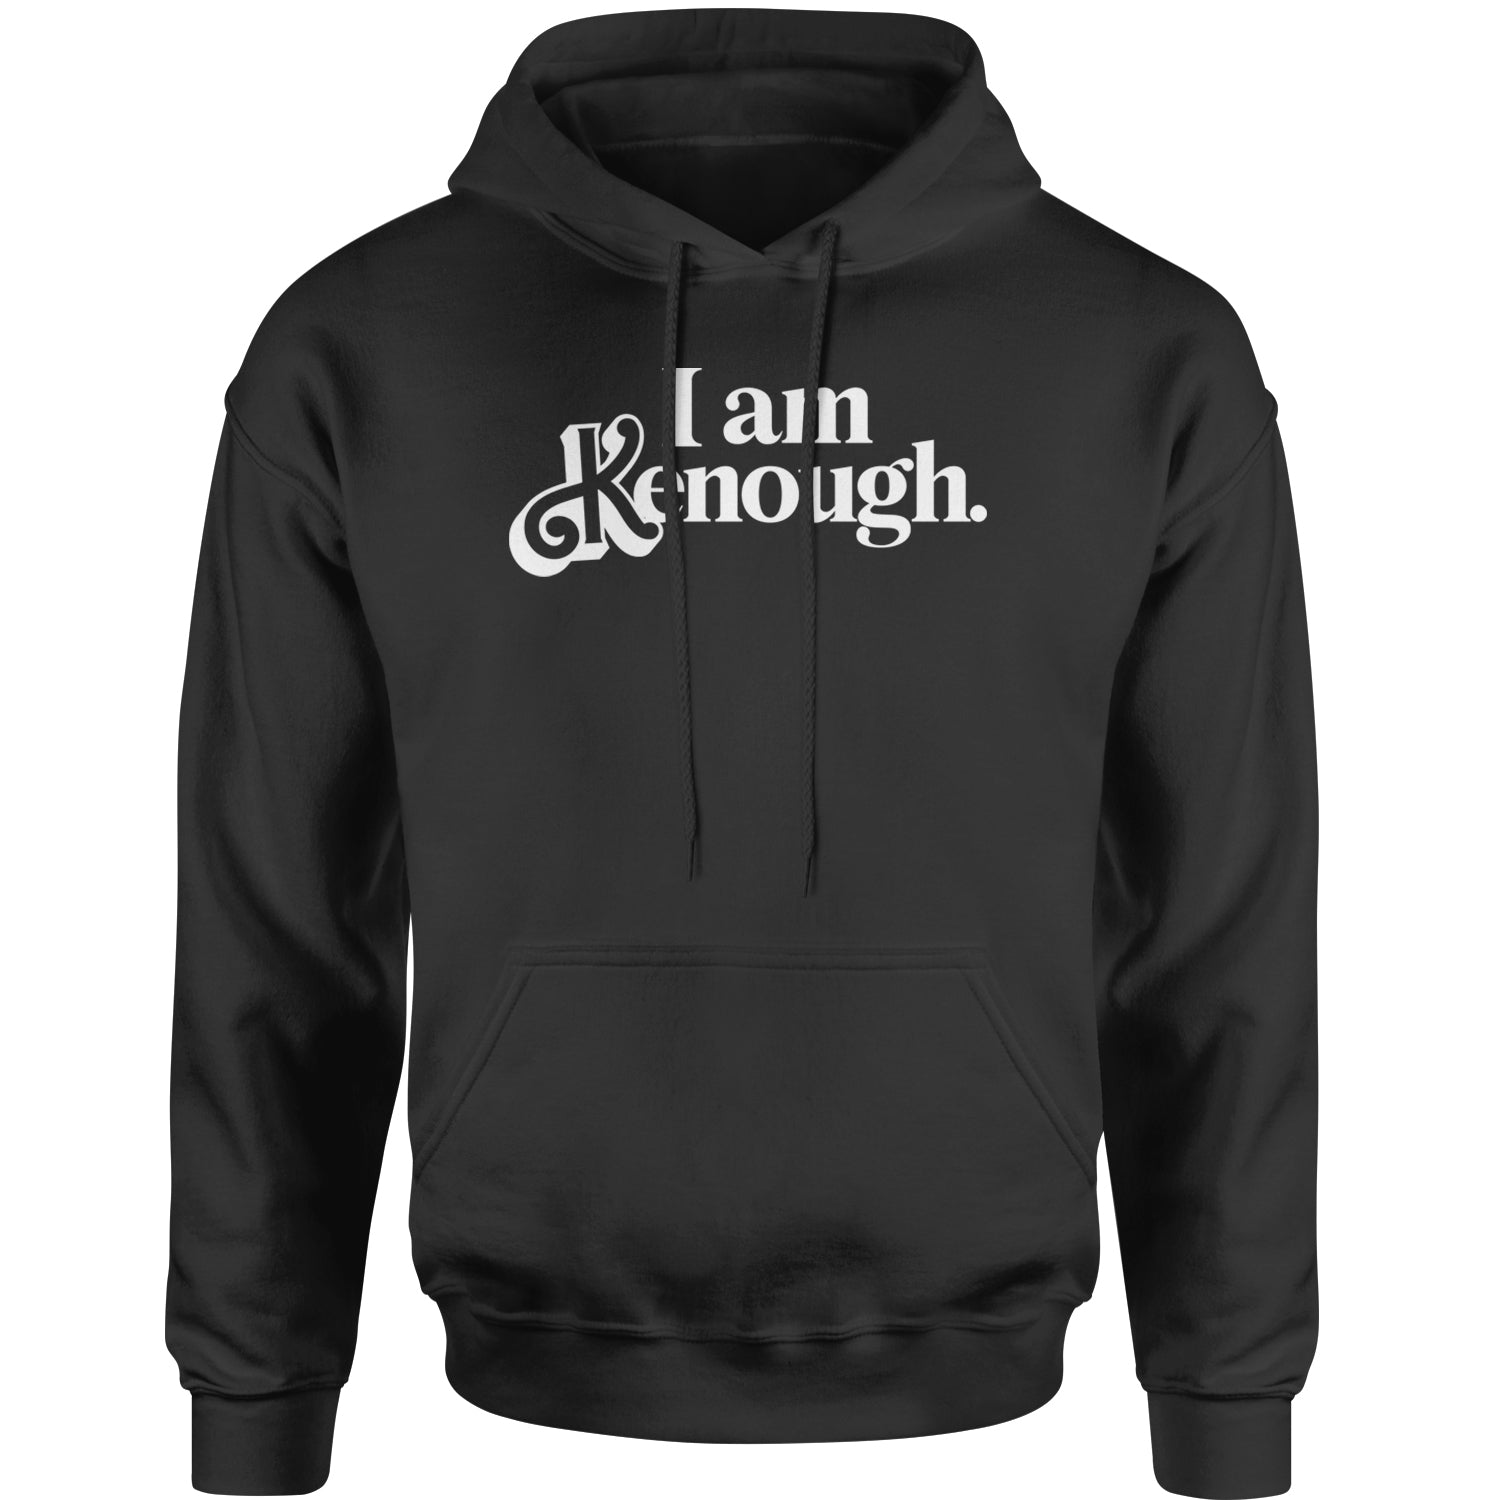 I Am Kenough White Print Adult Hoodie Sweatshirt